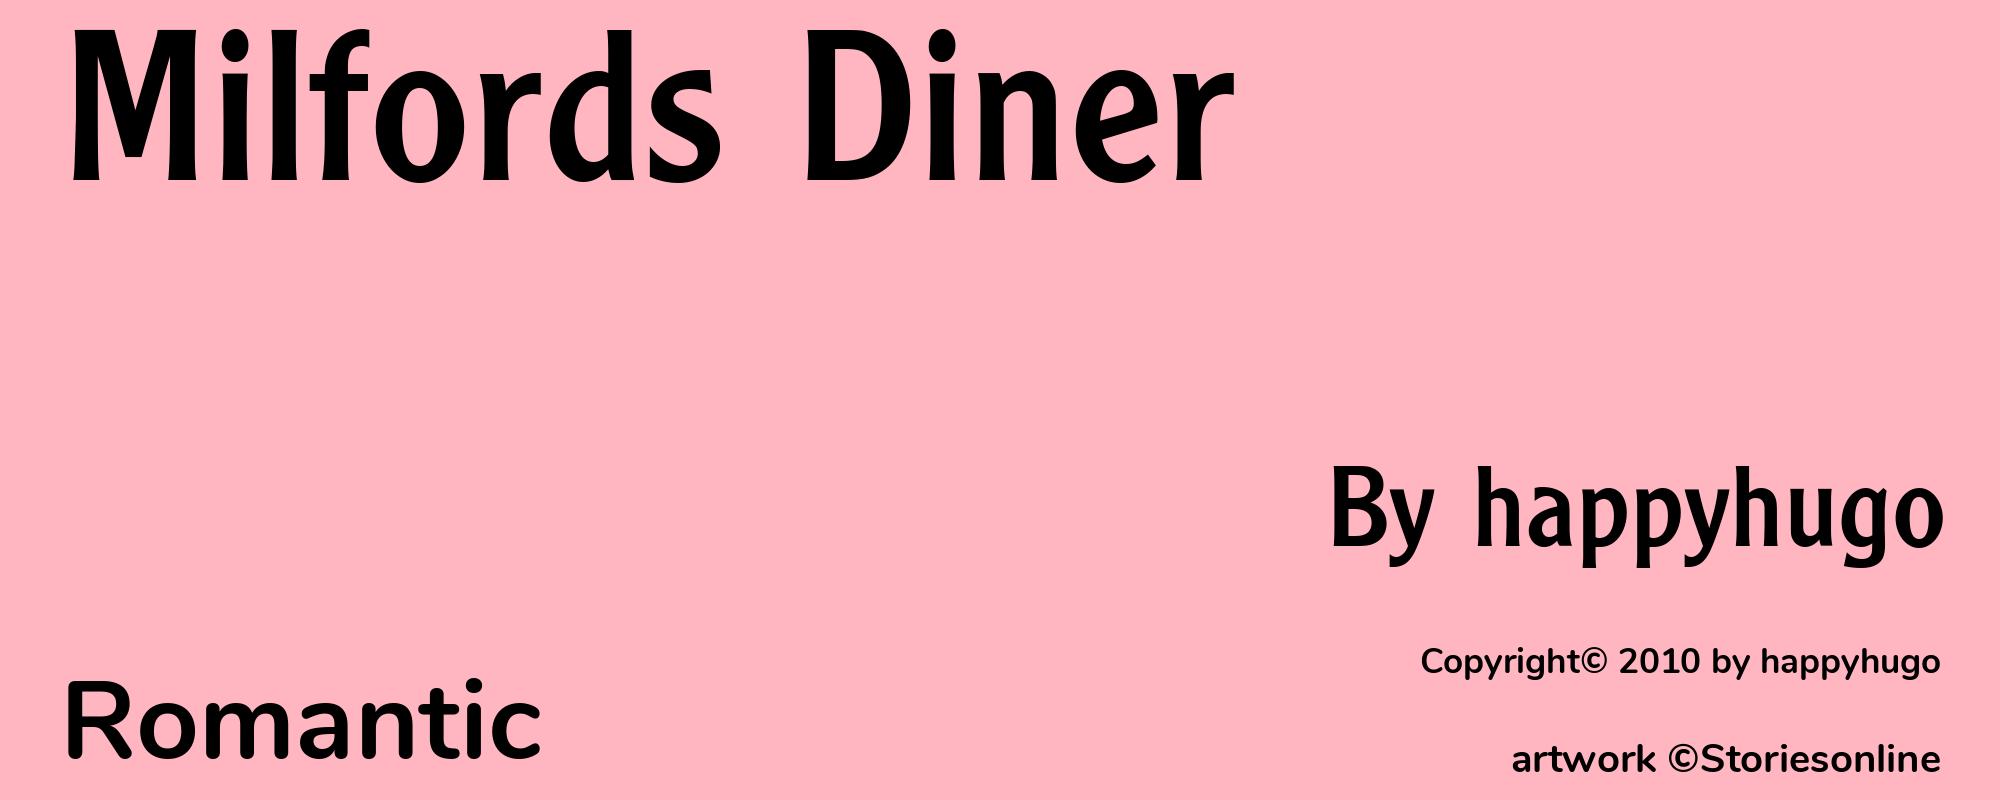 Milfords Diner - Cover